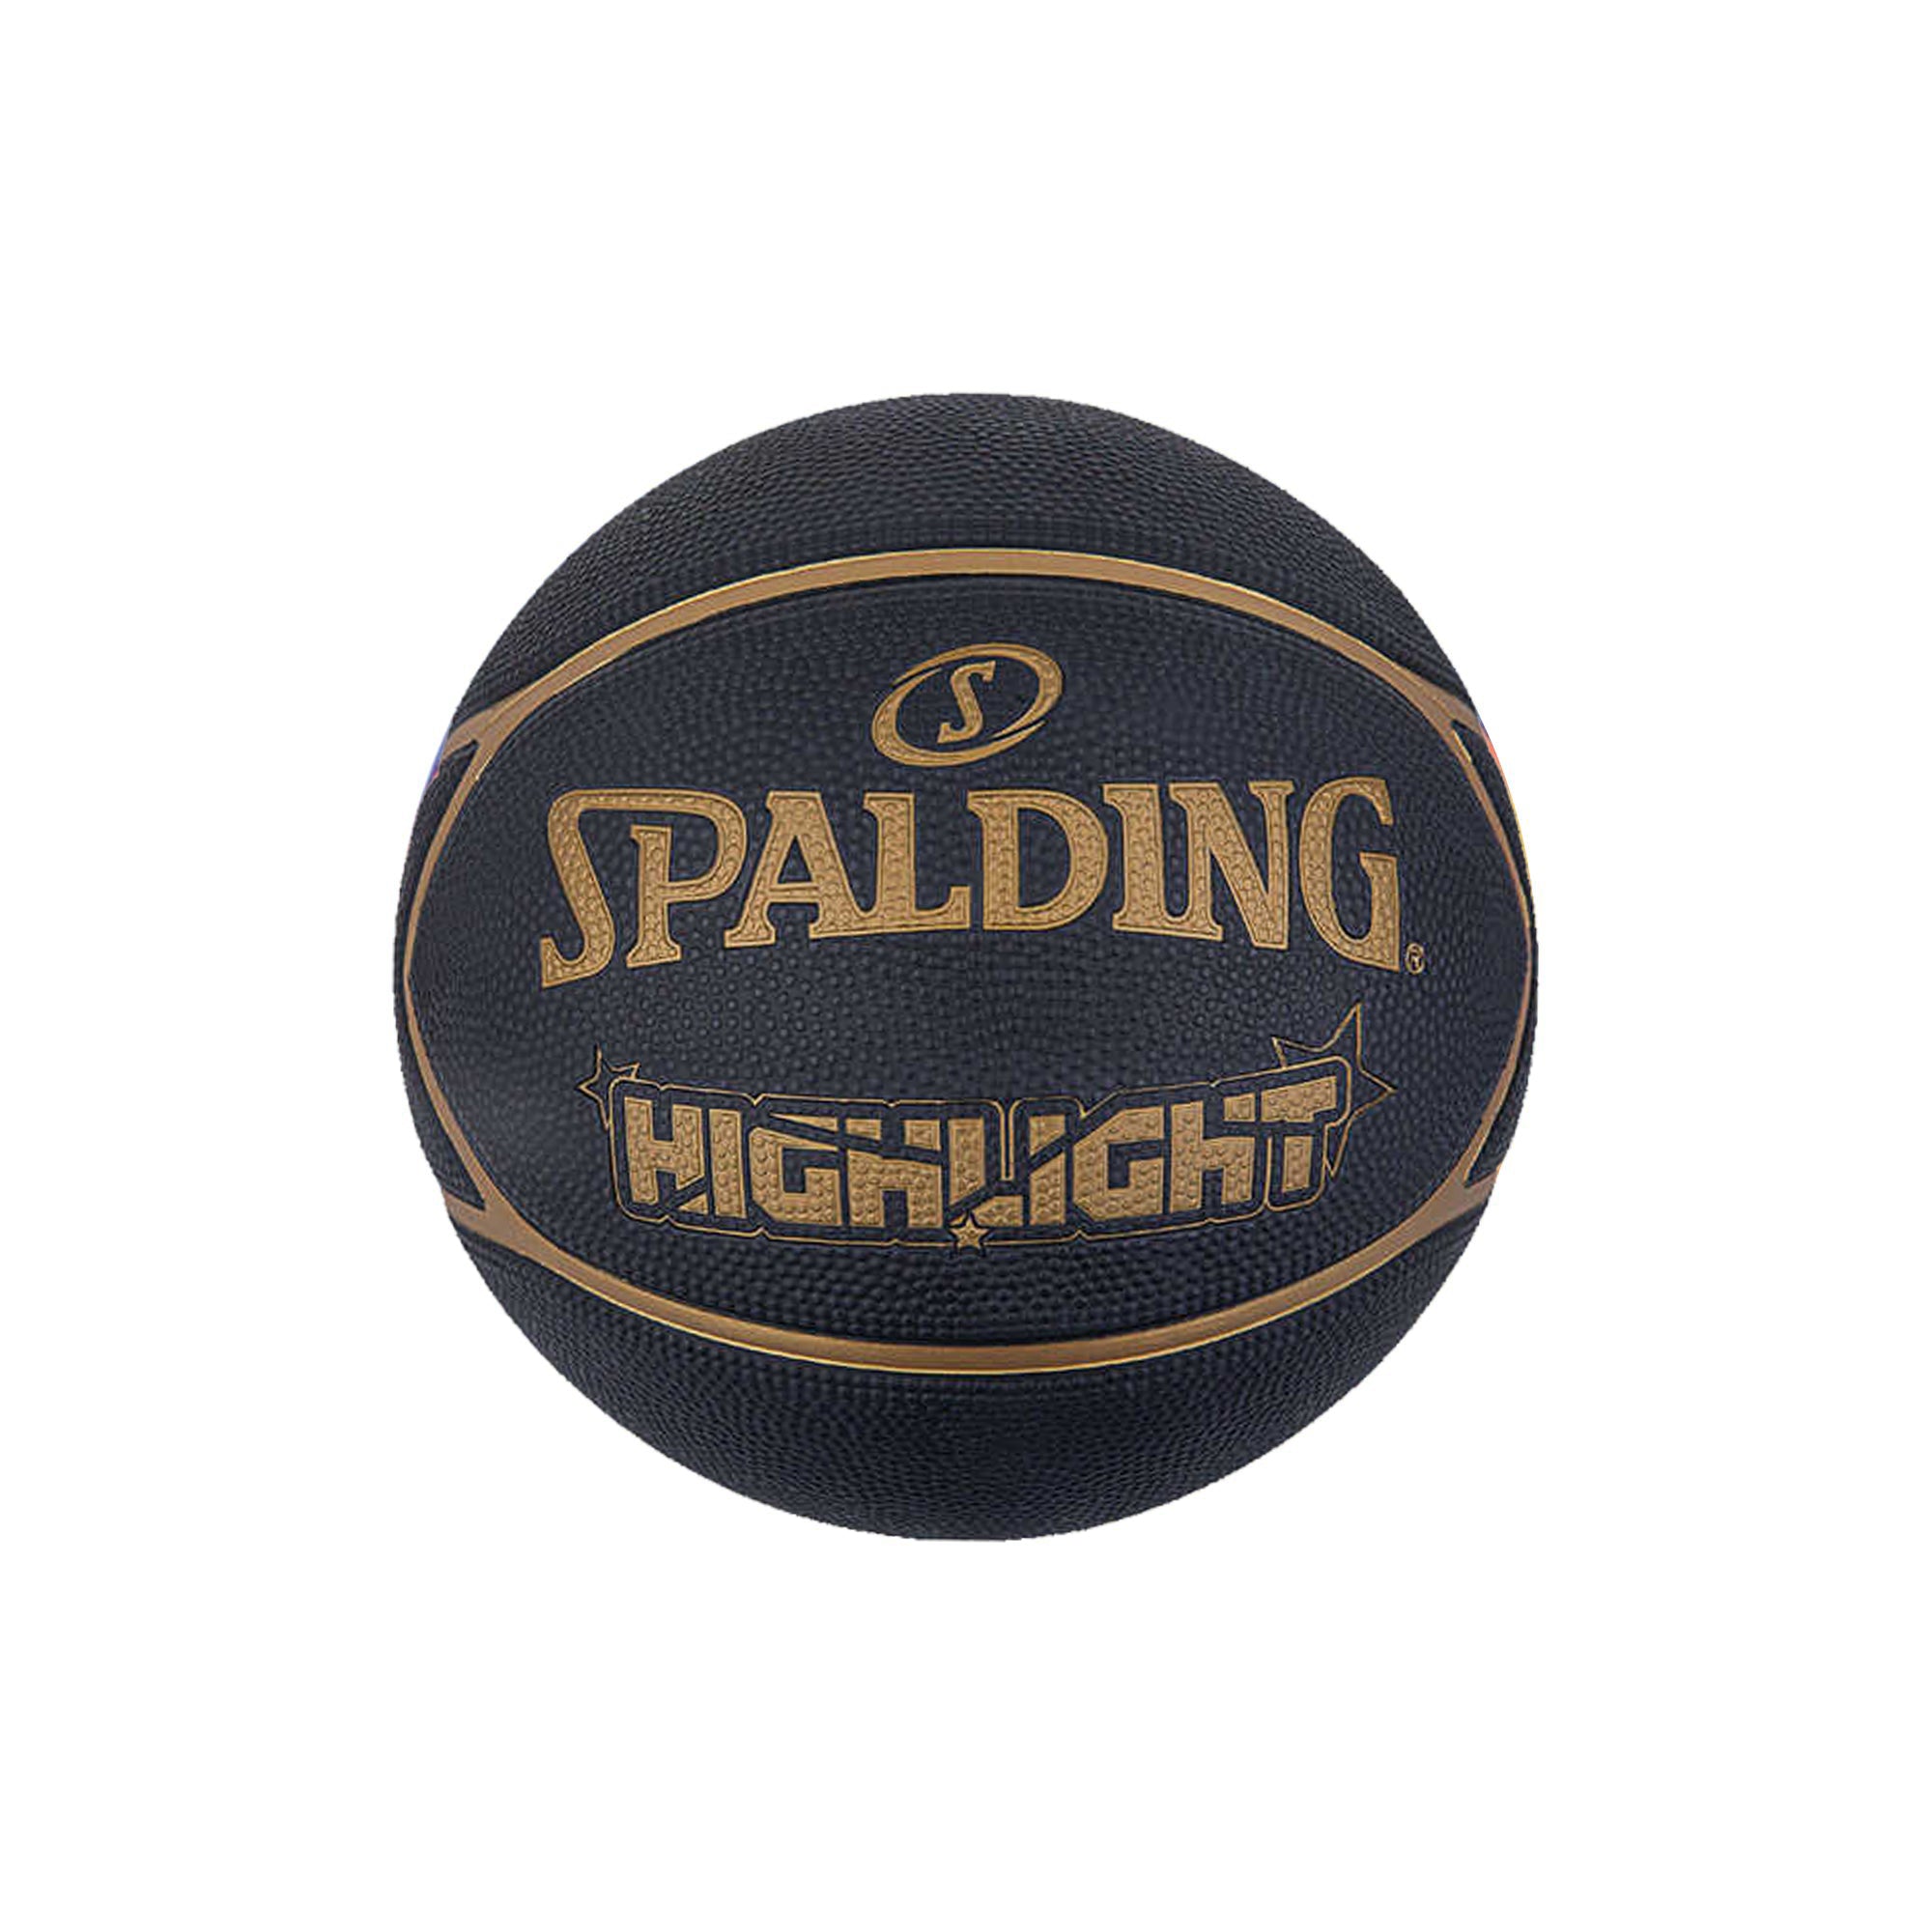 Spalding Basketbol Topu 2021 Highlight Black Gold Size:7 Rub (84355Z)